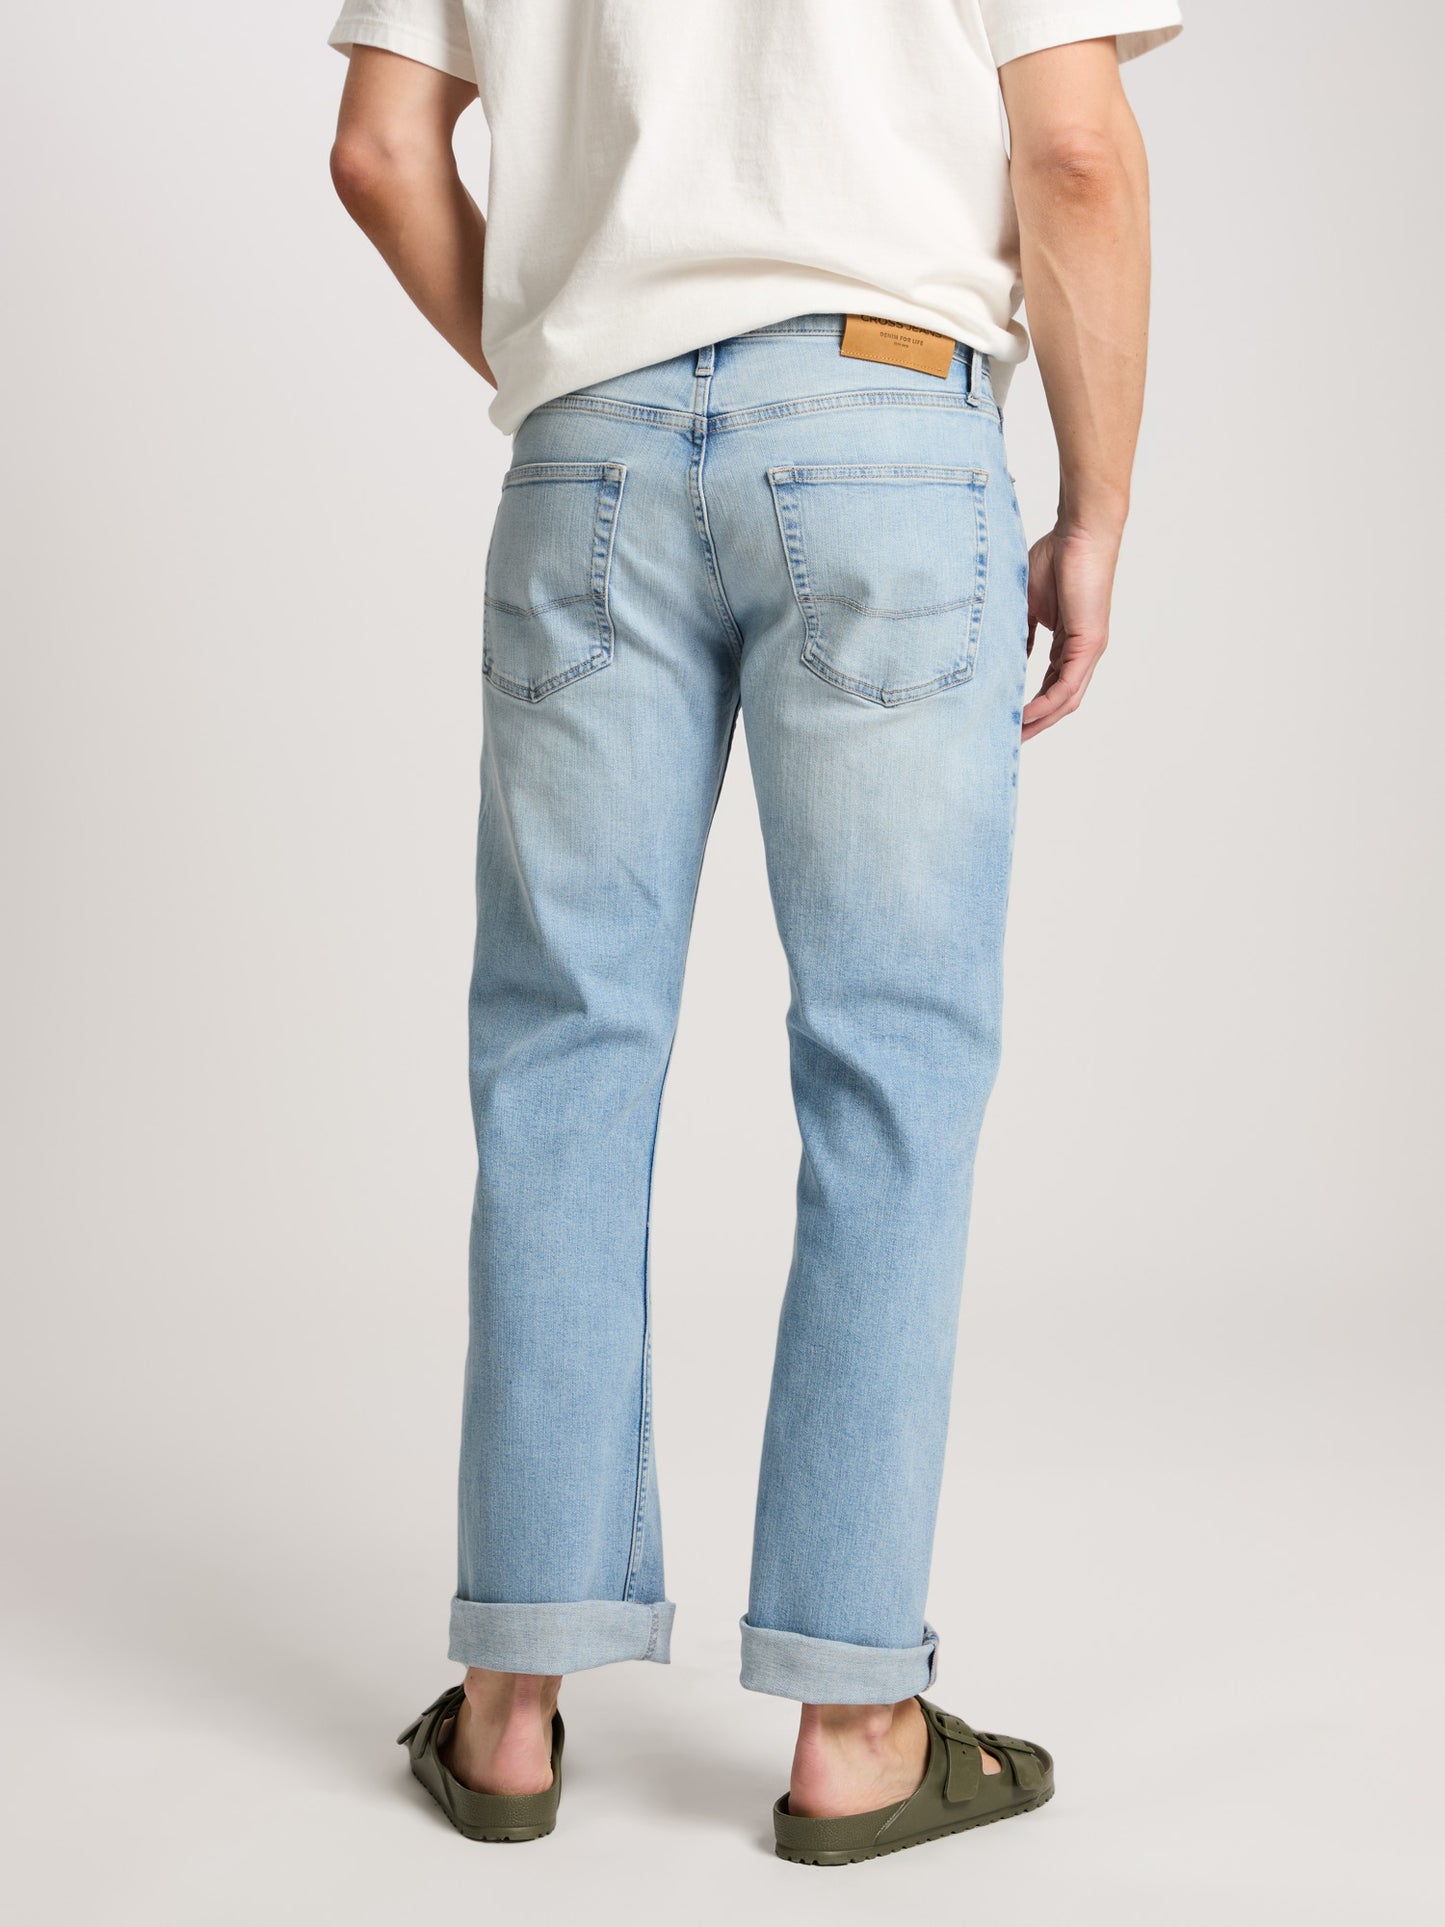 Colin men's jeans bootcut in light blue